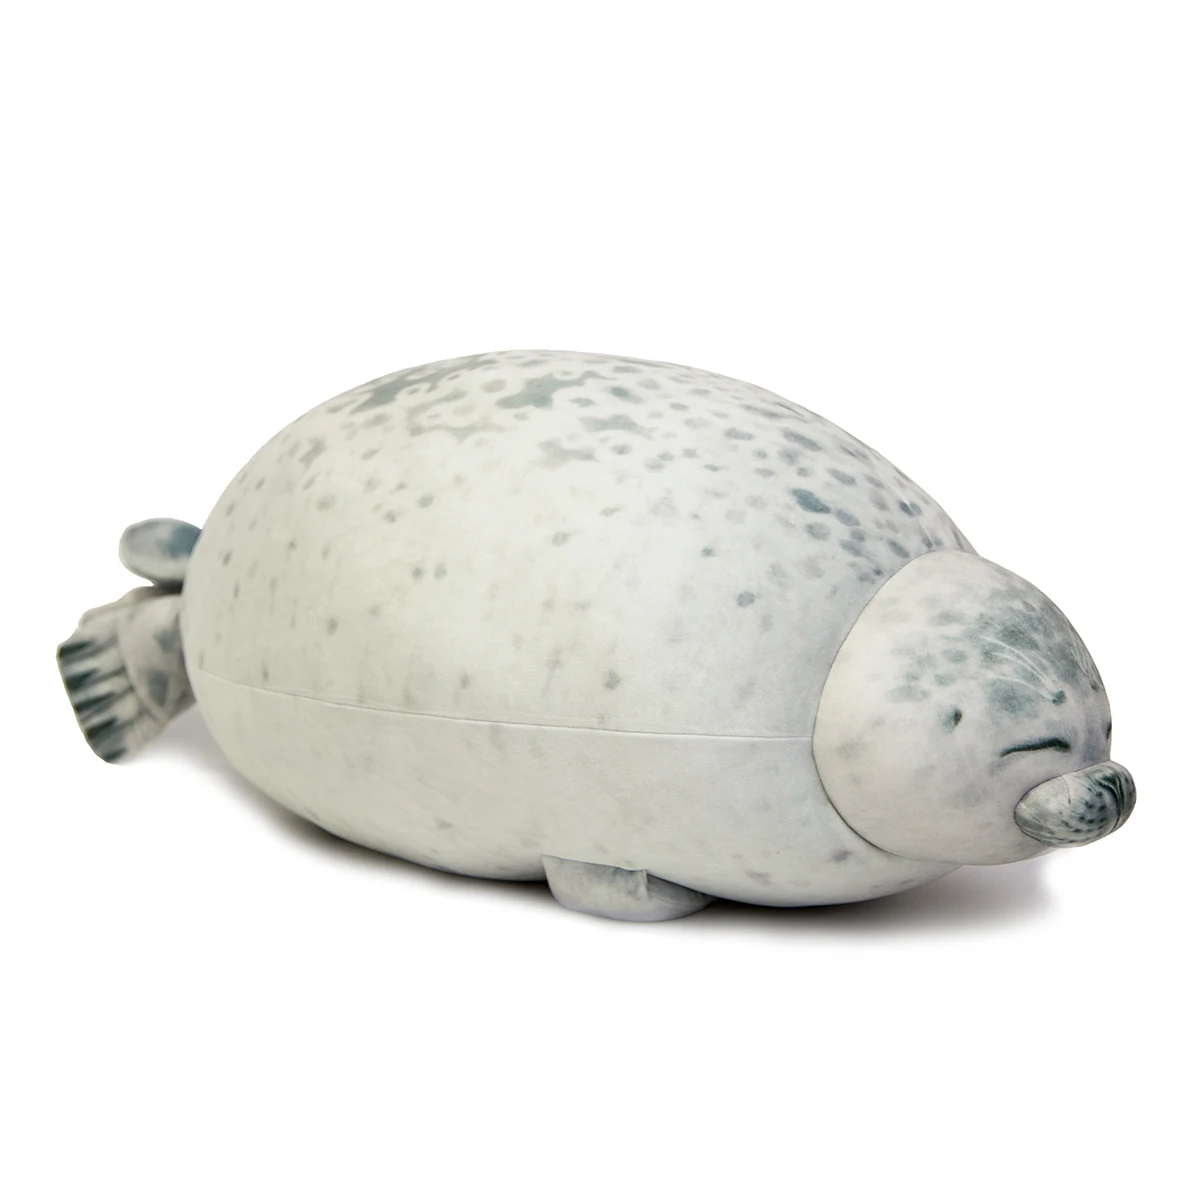 Cute Blob Seal Sea Animal Cushion Toy for Kids Girls Boys Seal Plush Pillow Doll Stuffed Animal Soft Pillow Plush Toy